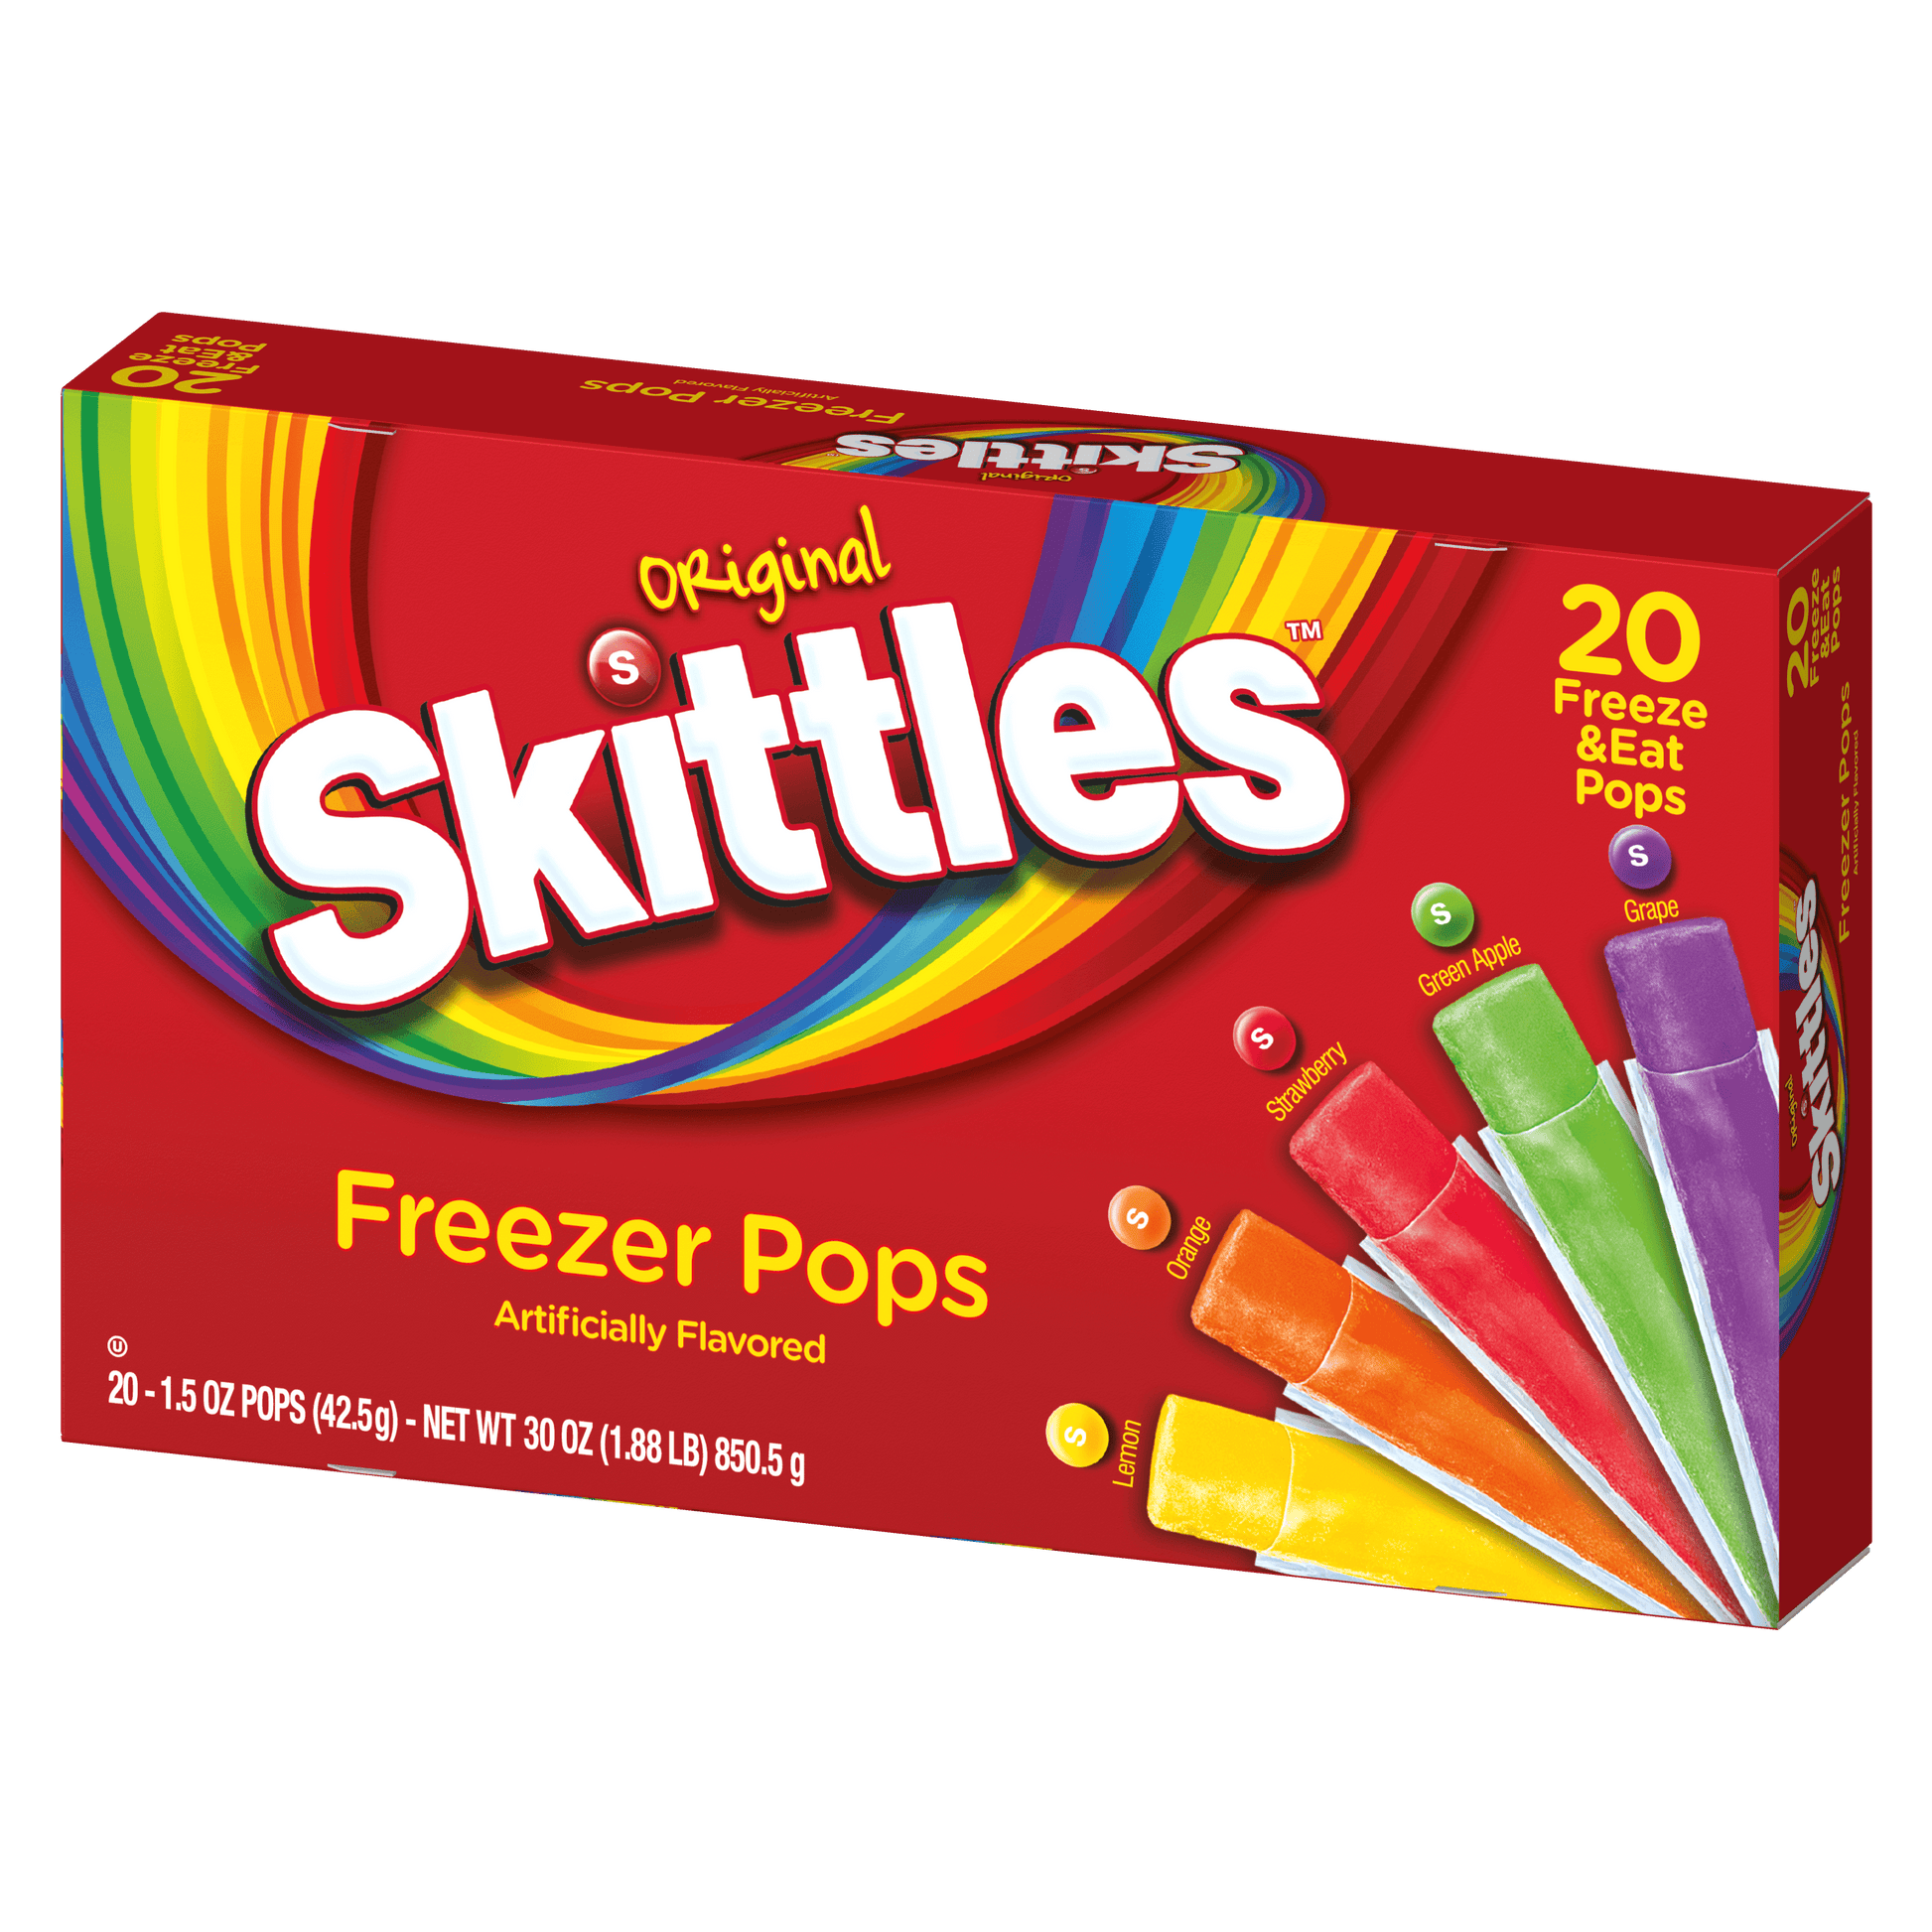 Skittles variety pack freezer pops 20 count